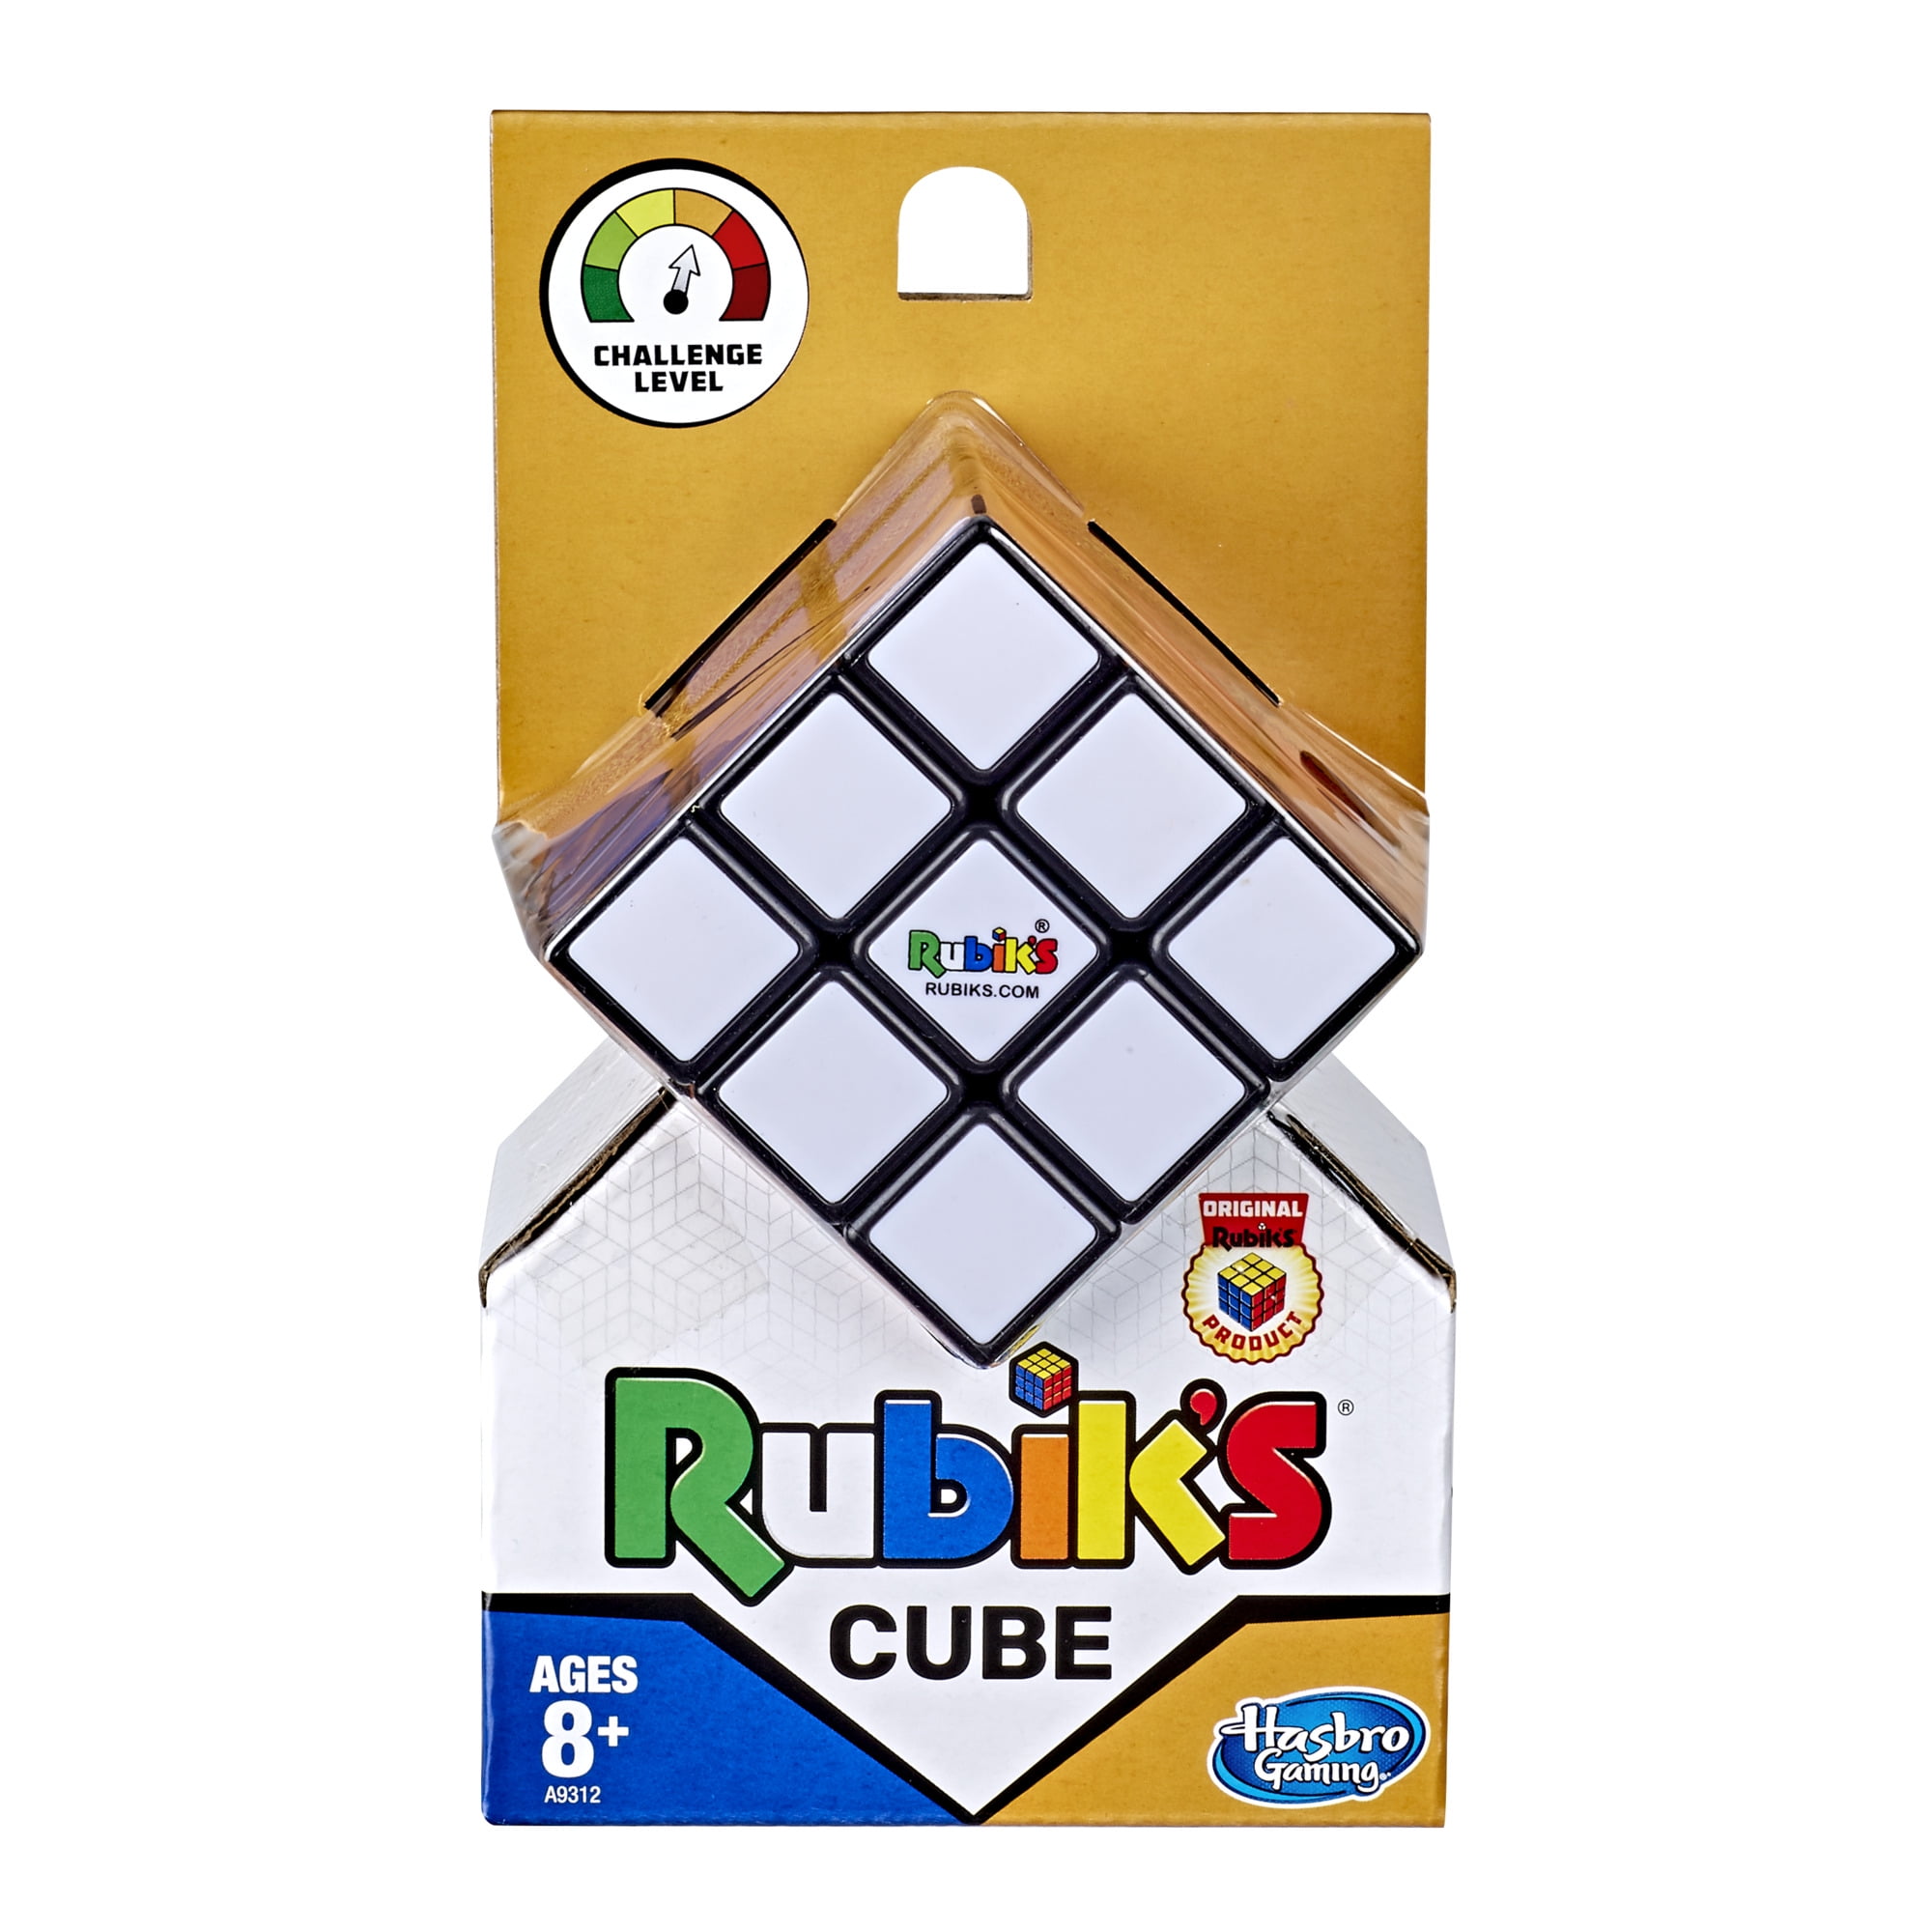 Kids Cube Fun Original Toy Magic Mind Game Classic Adult Puzzle Brain Teaser 3x3 